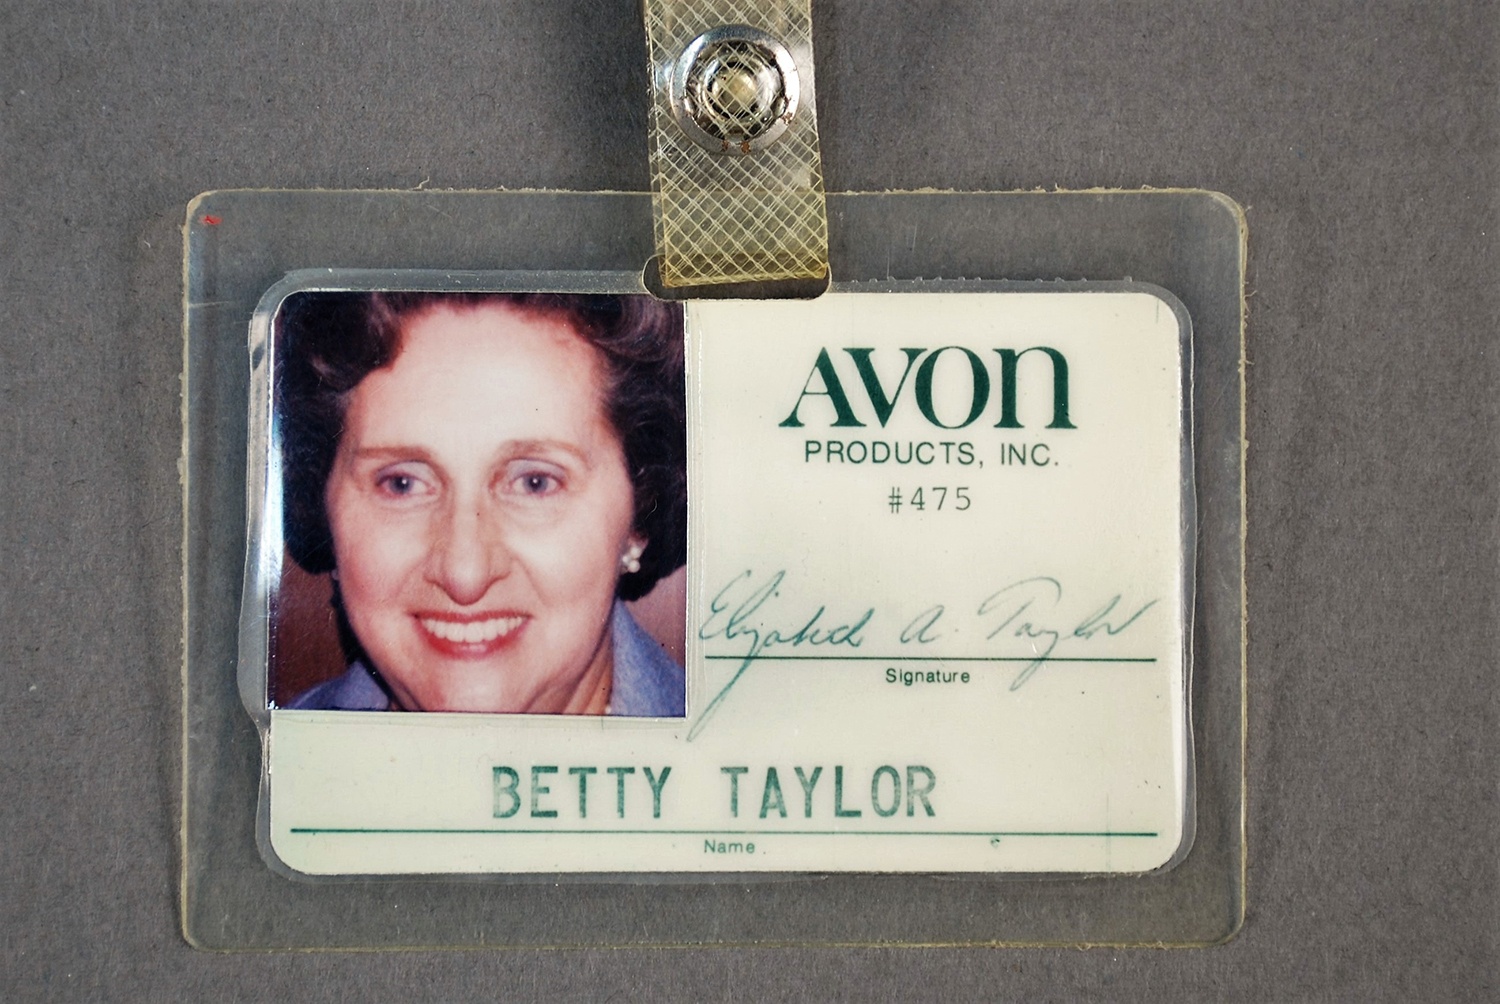 Betty Taylor’s Avon representative i.d. badge, c. 1970.